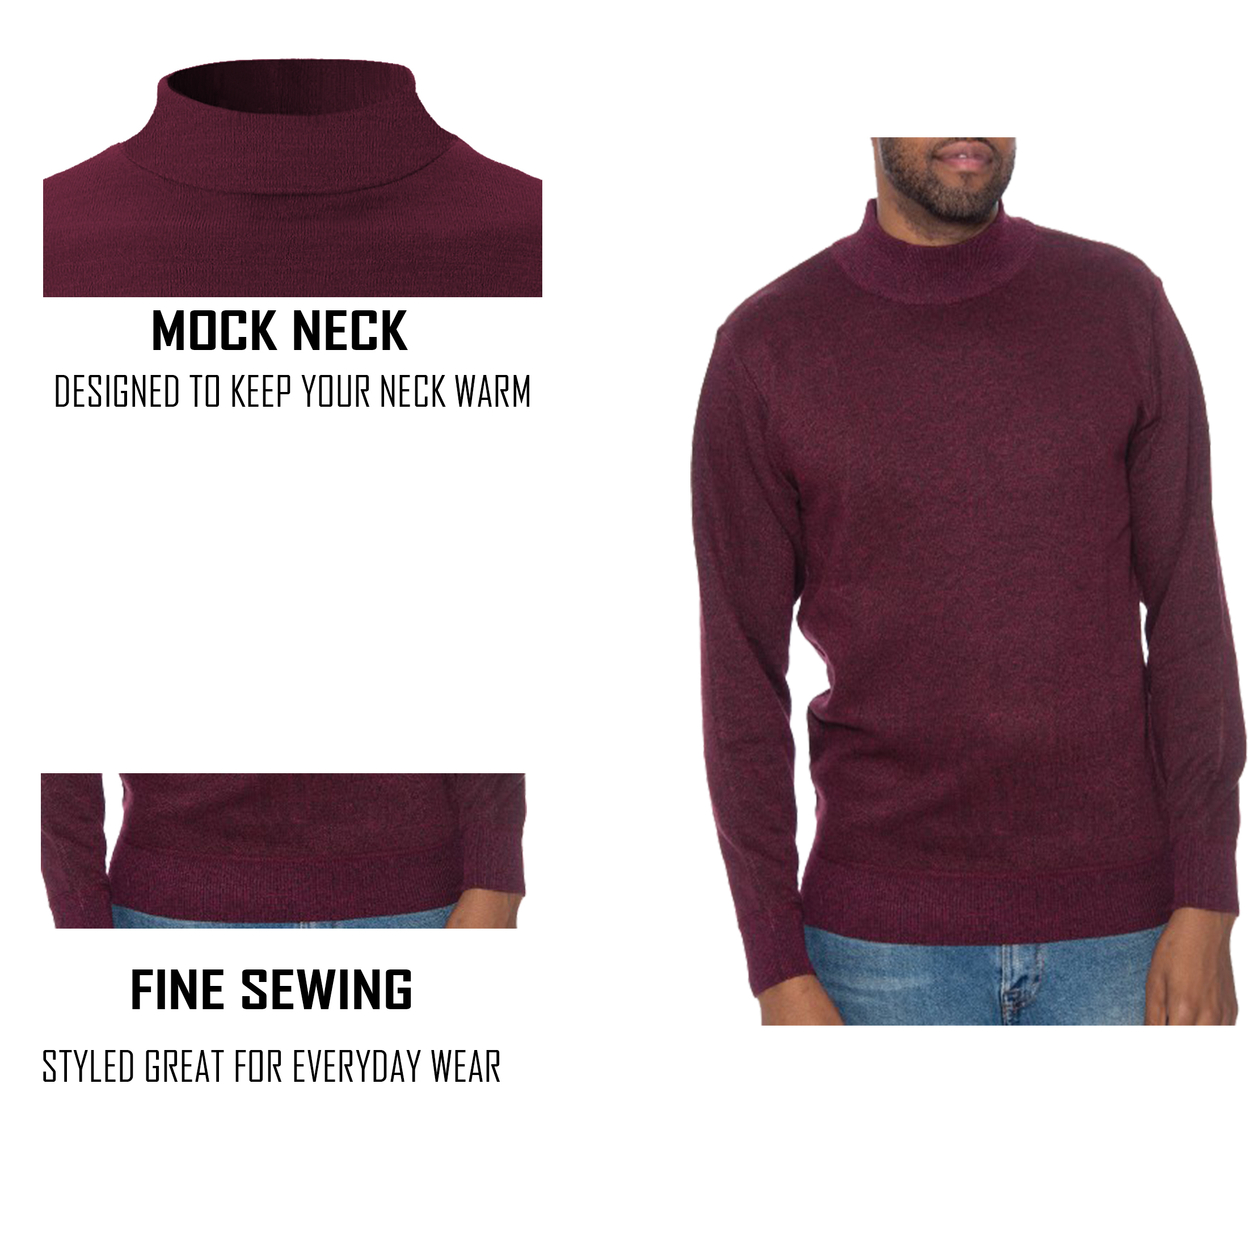 2-Pack: Men's Winter Warm Cozy Knit Slim Fit Mock Neck Sweater - White & Burgundy, Xx-large